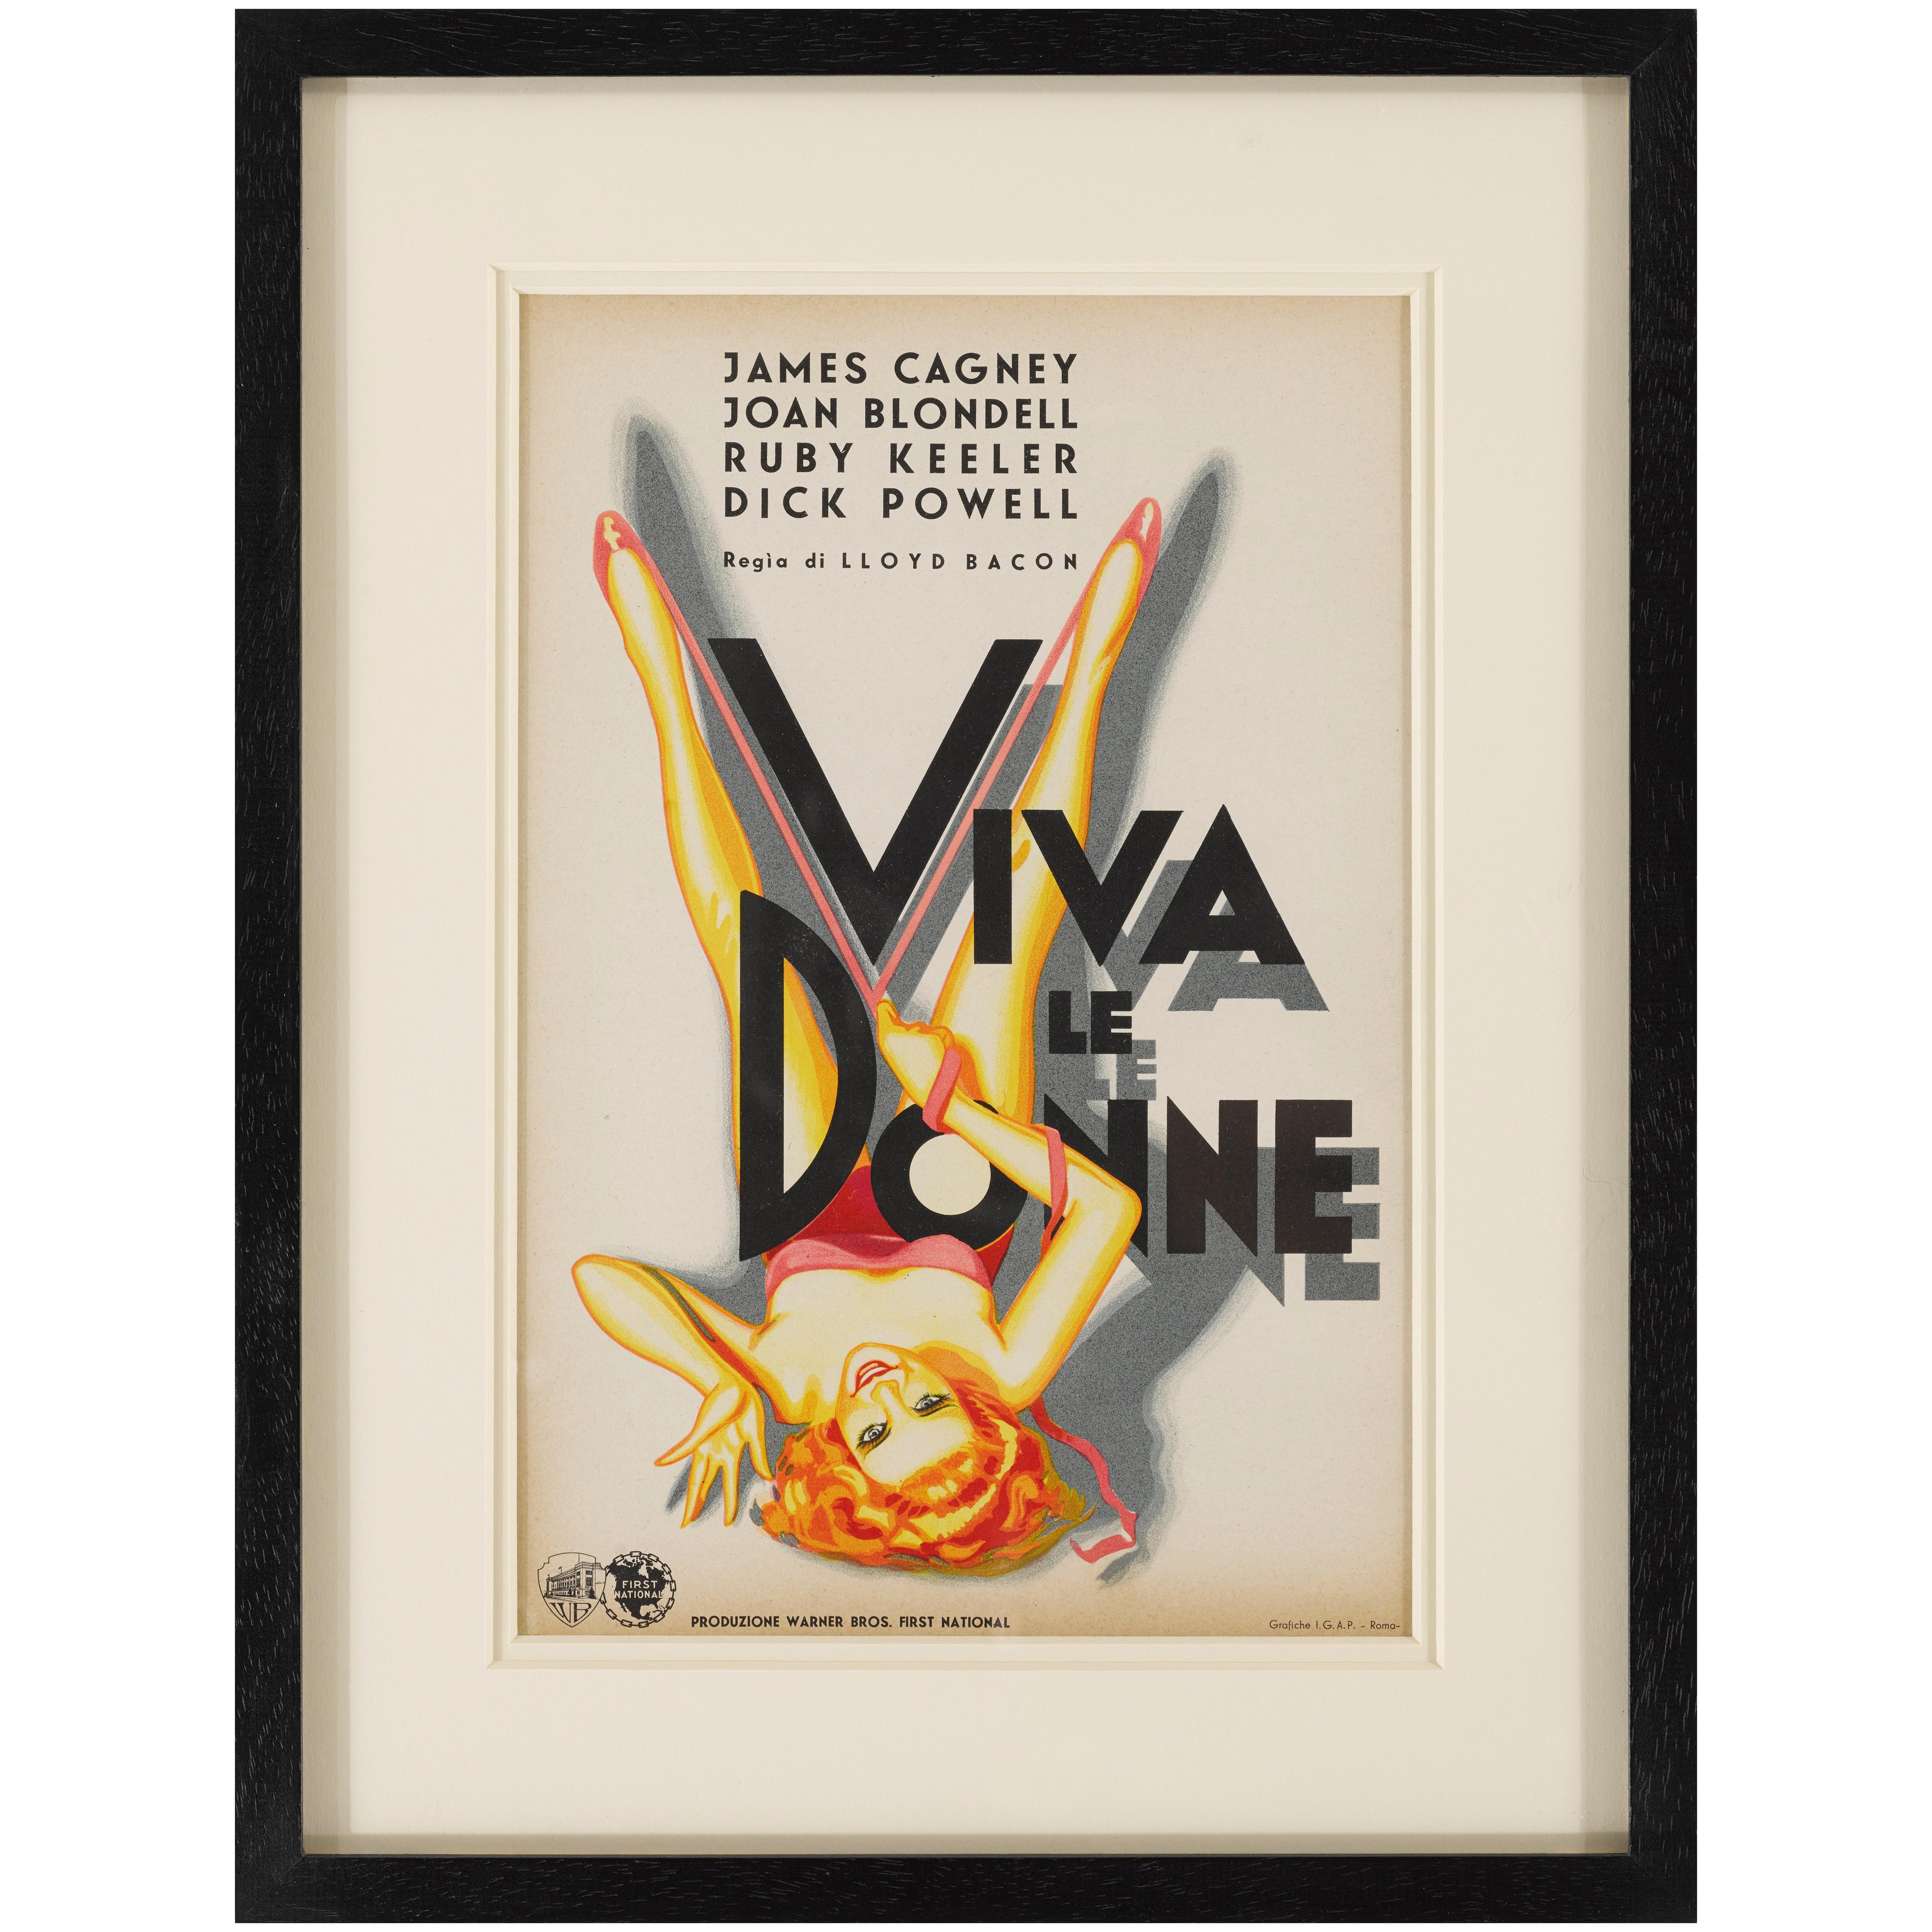 "Footlight Parade / Viva le Donne" Original Italian Film Poster For Sale